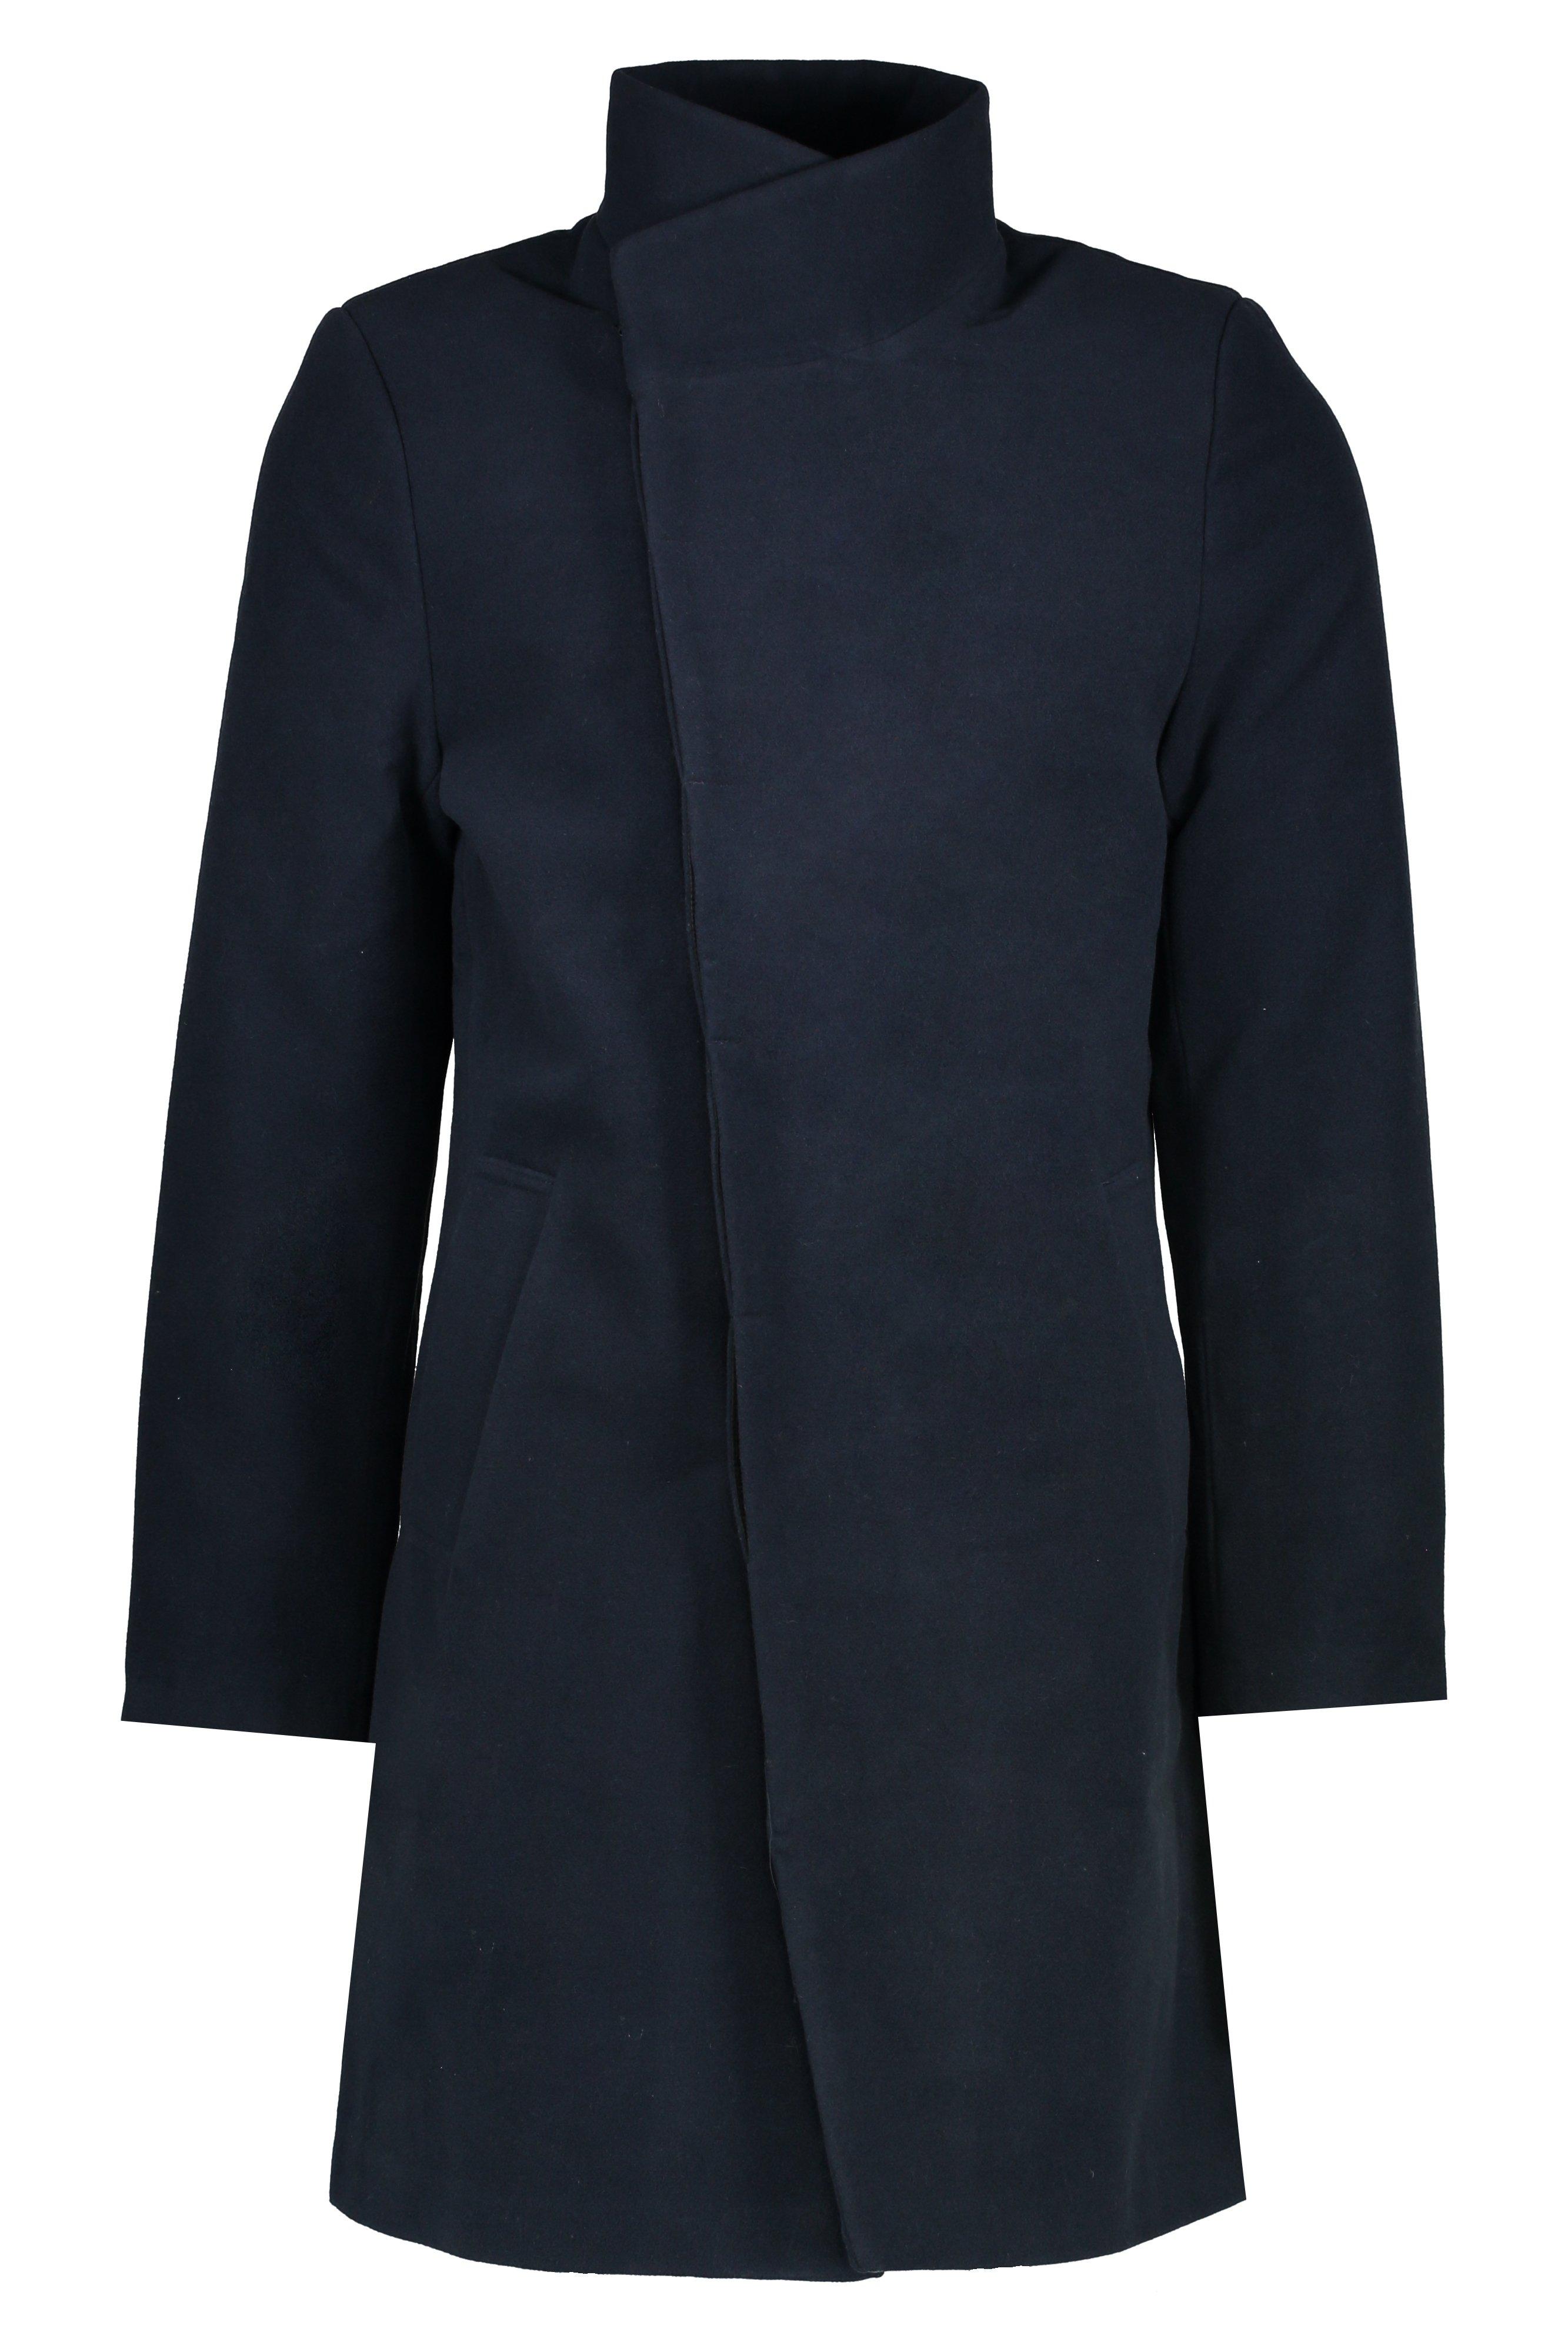 BoohooMAN Funnel Neck Wool Look Overcoat in Navy Blue for Men Mens Clothing Coats Long coats and winter coats 